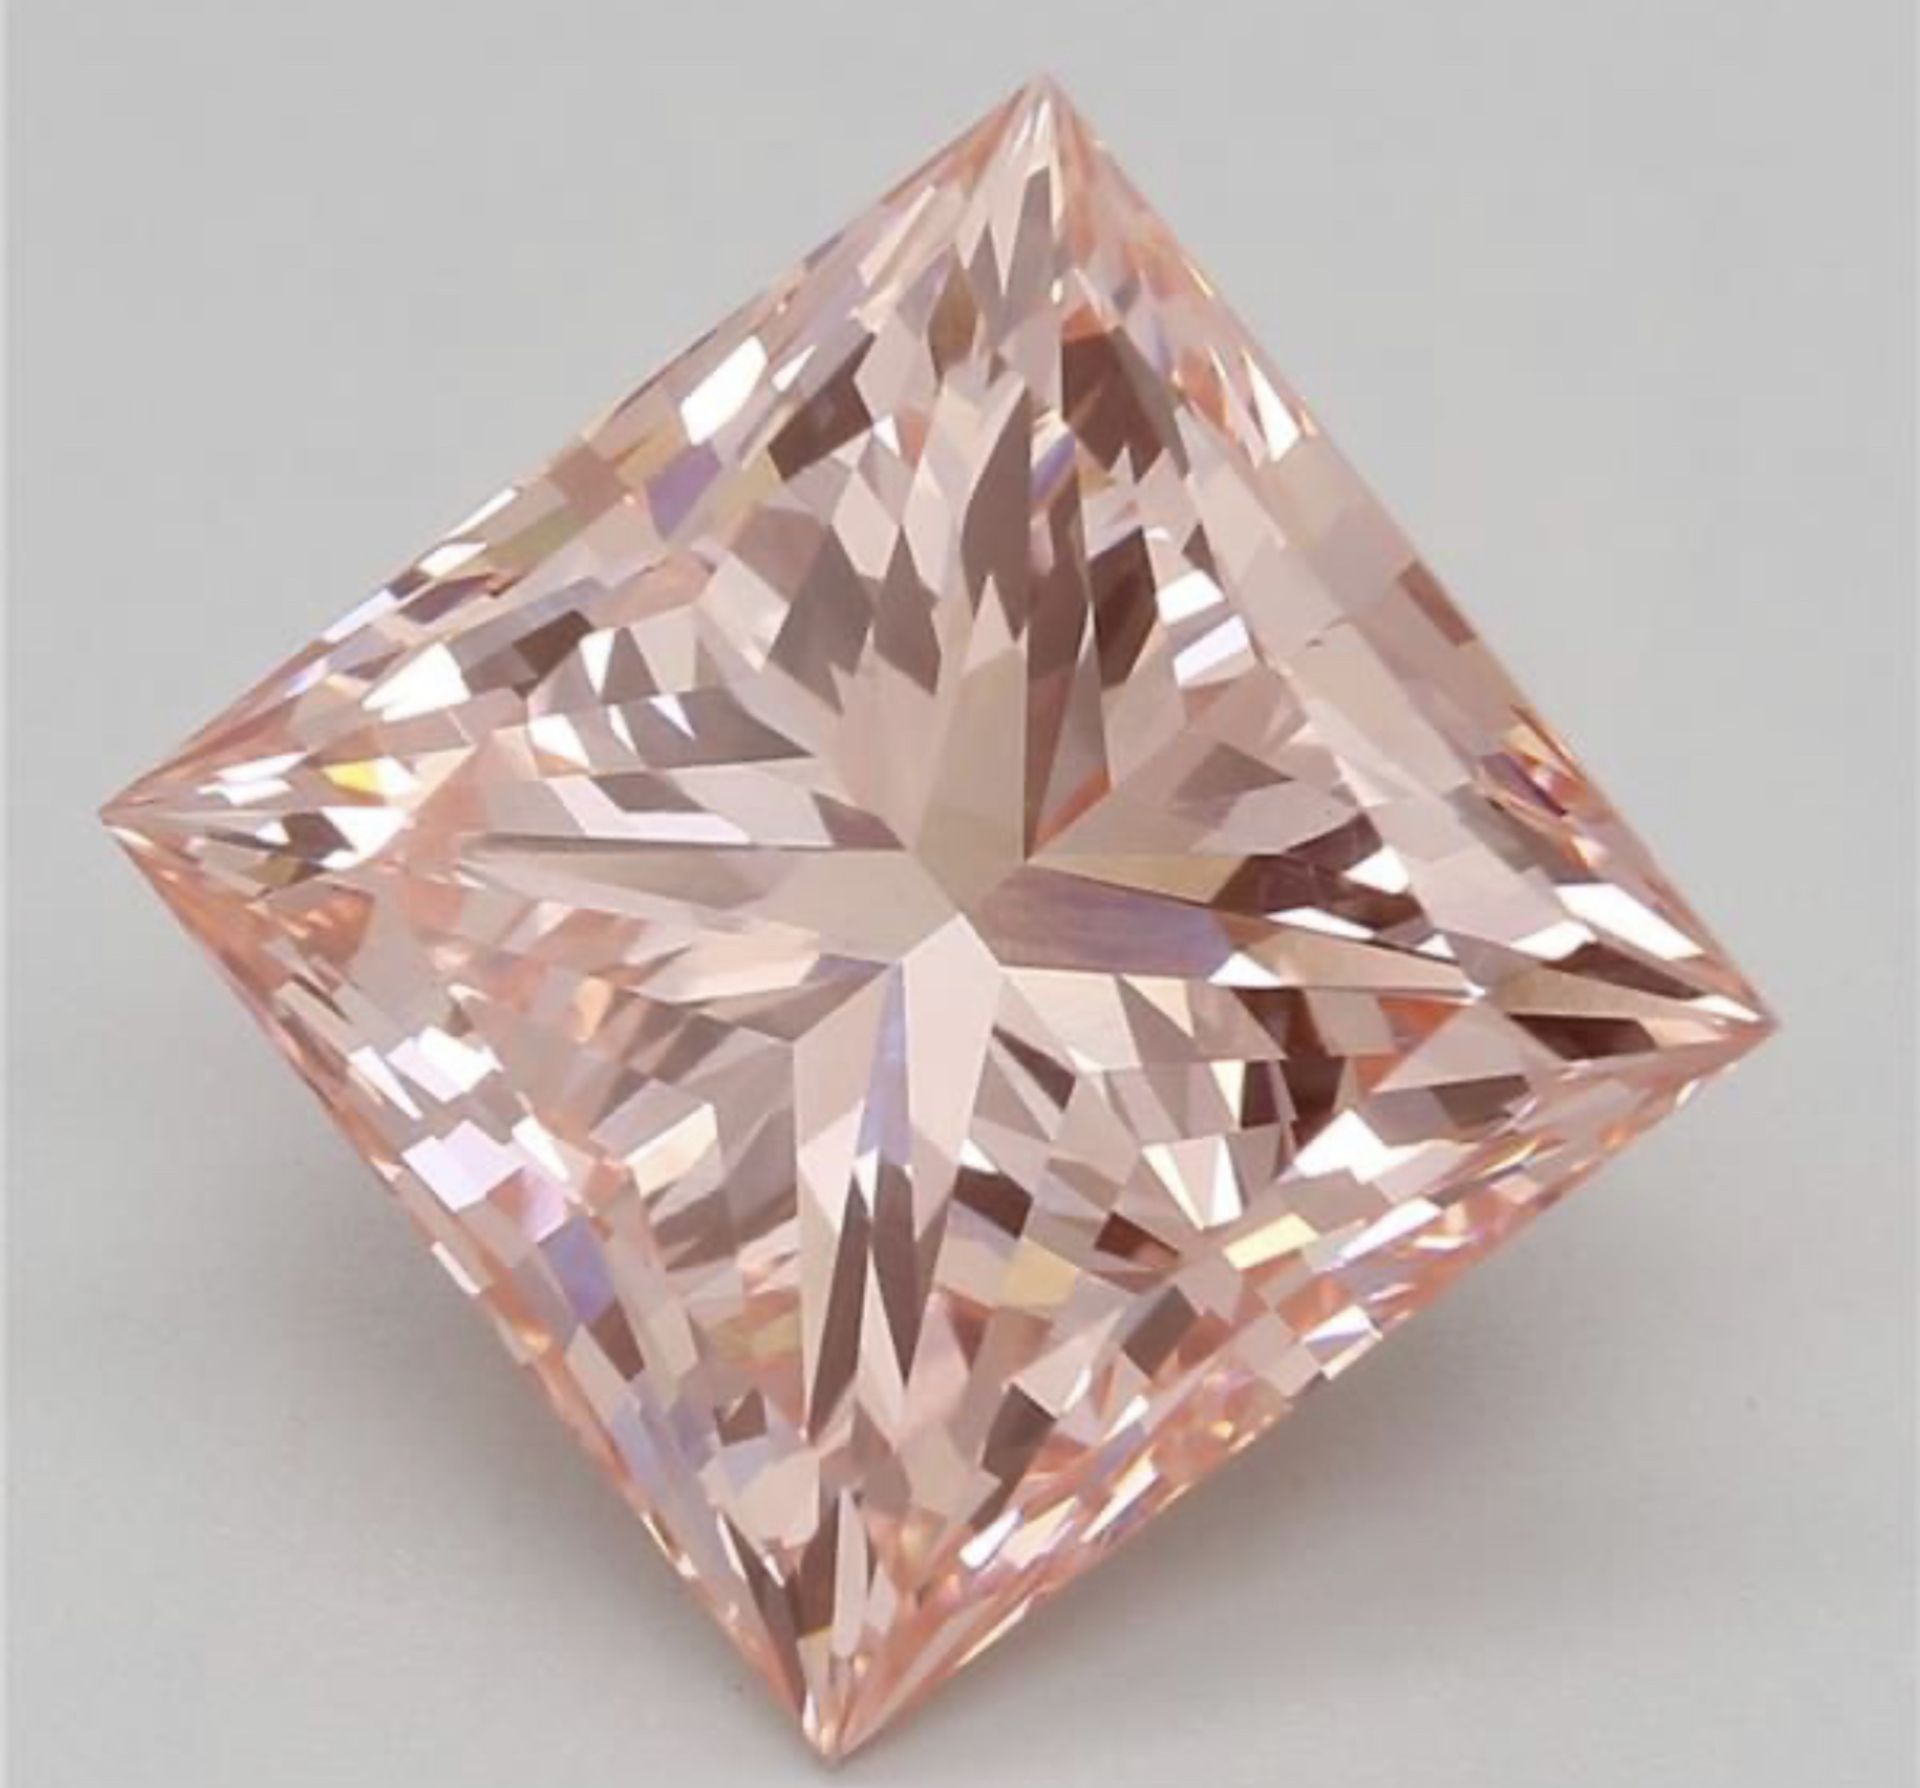 ** ON SALE ** Princess Cut Diamond Fancy Pink Colour VVS2 Clarity 3.02 Carat EX EX - LG593370815 - Image 2 of 8